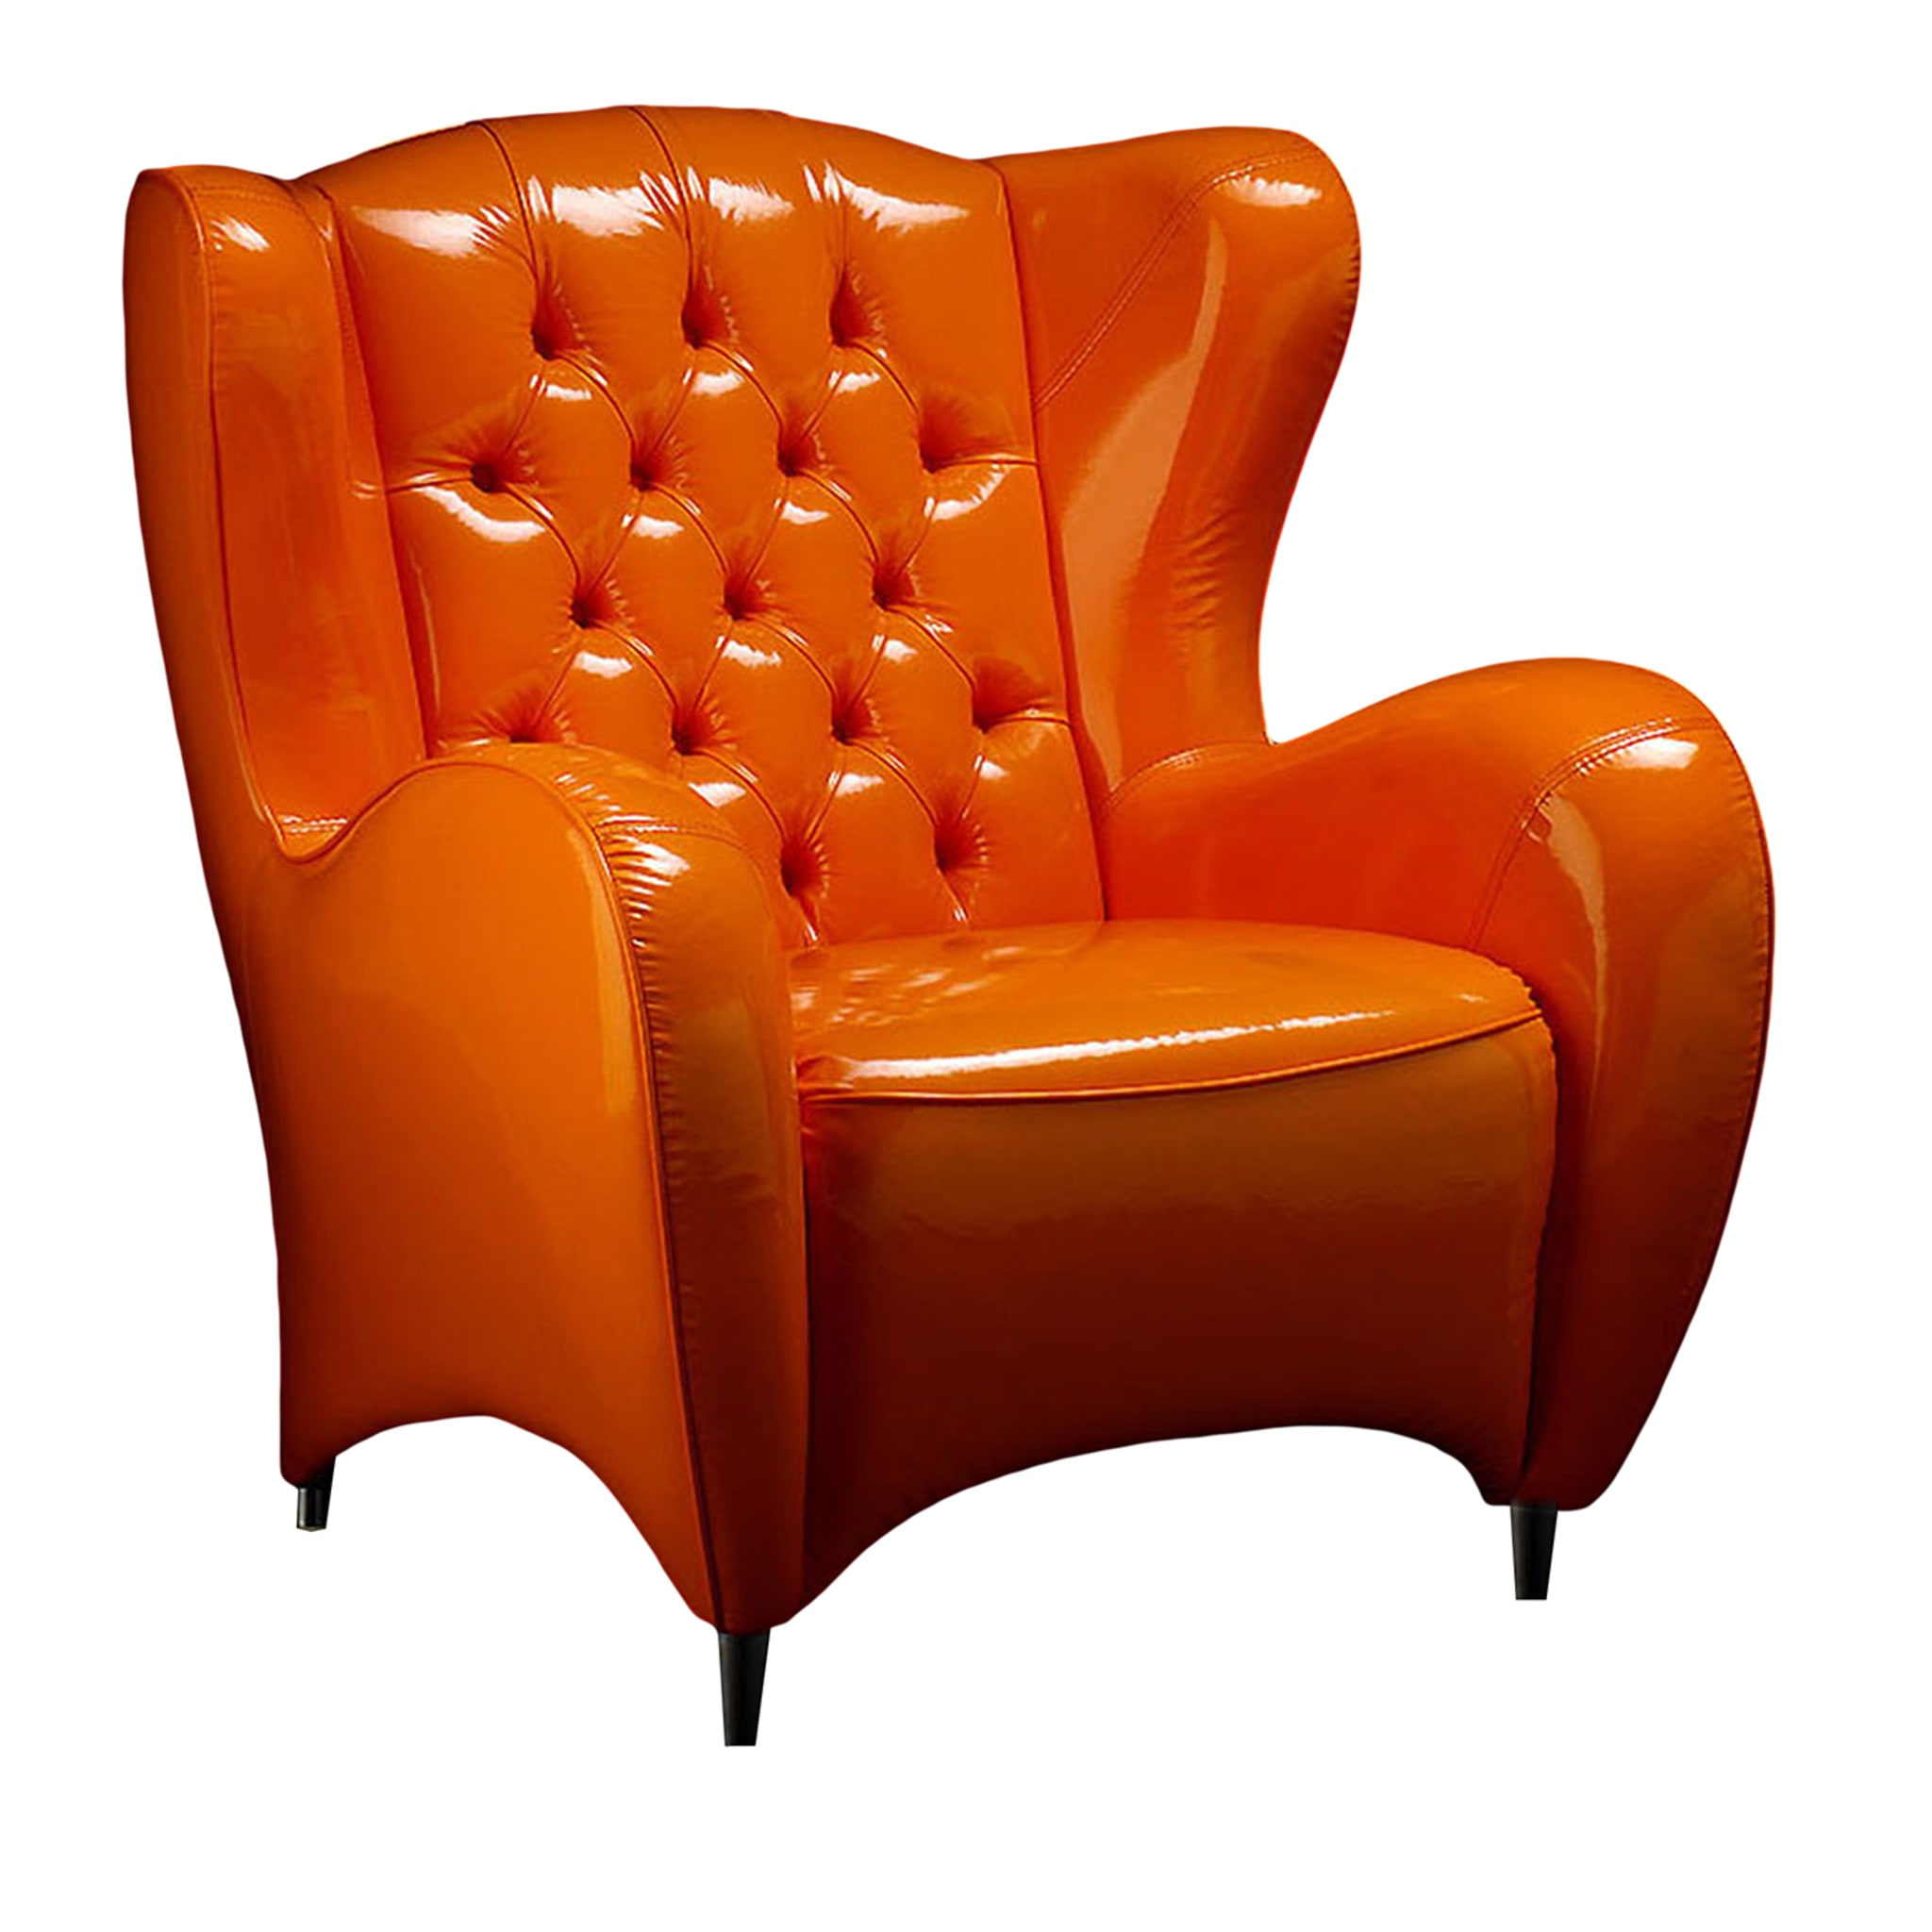 Schinke Orange Armchair - Main view